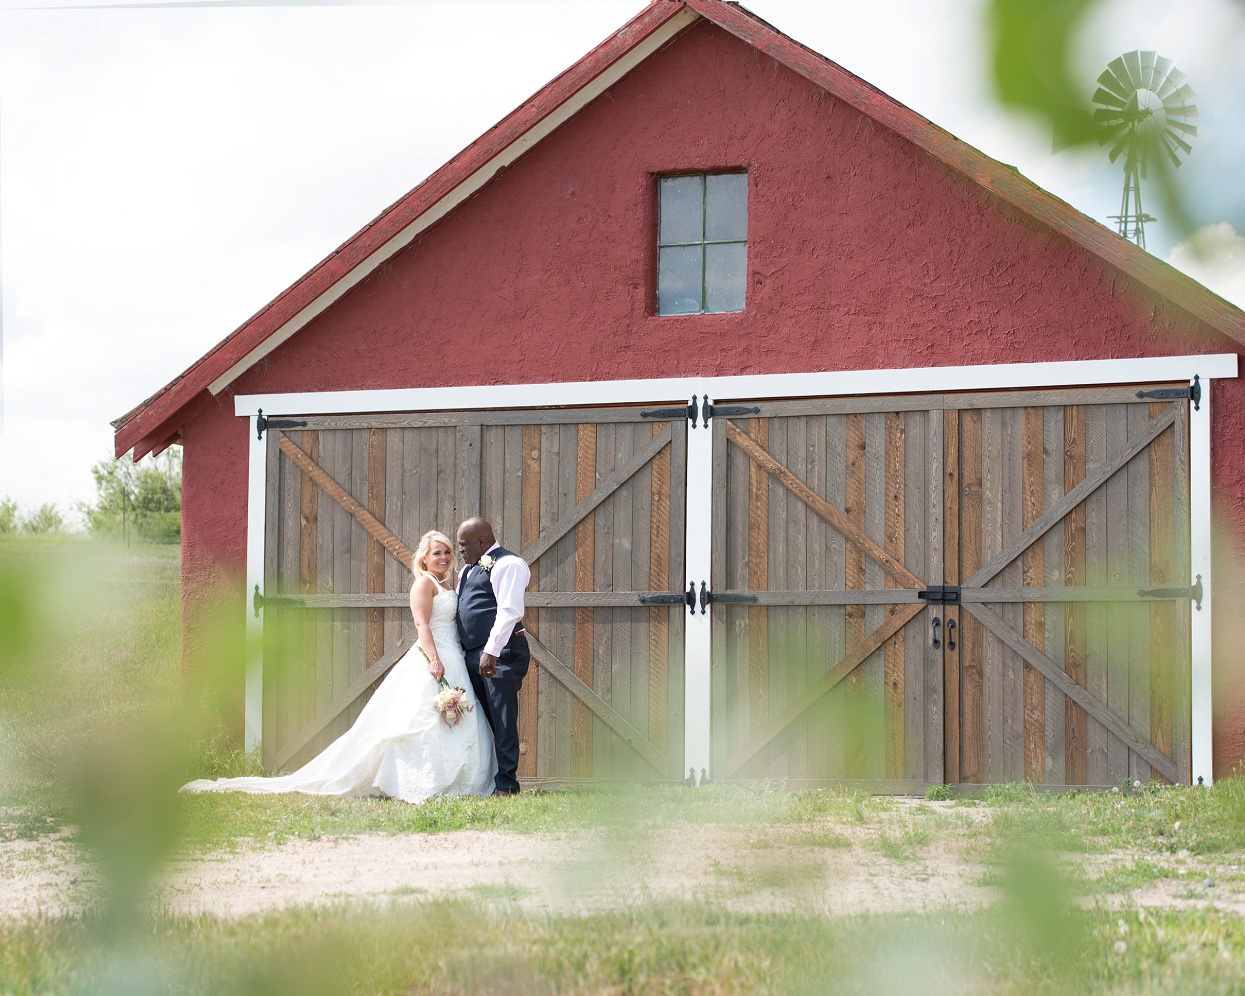 Bride and groom posing in front of a red barn, Colorado farm wedding